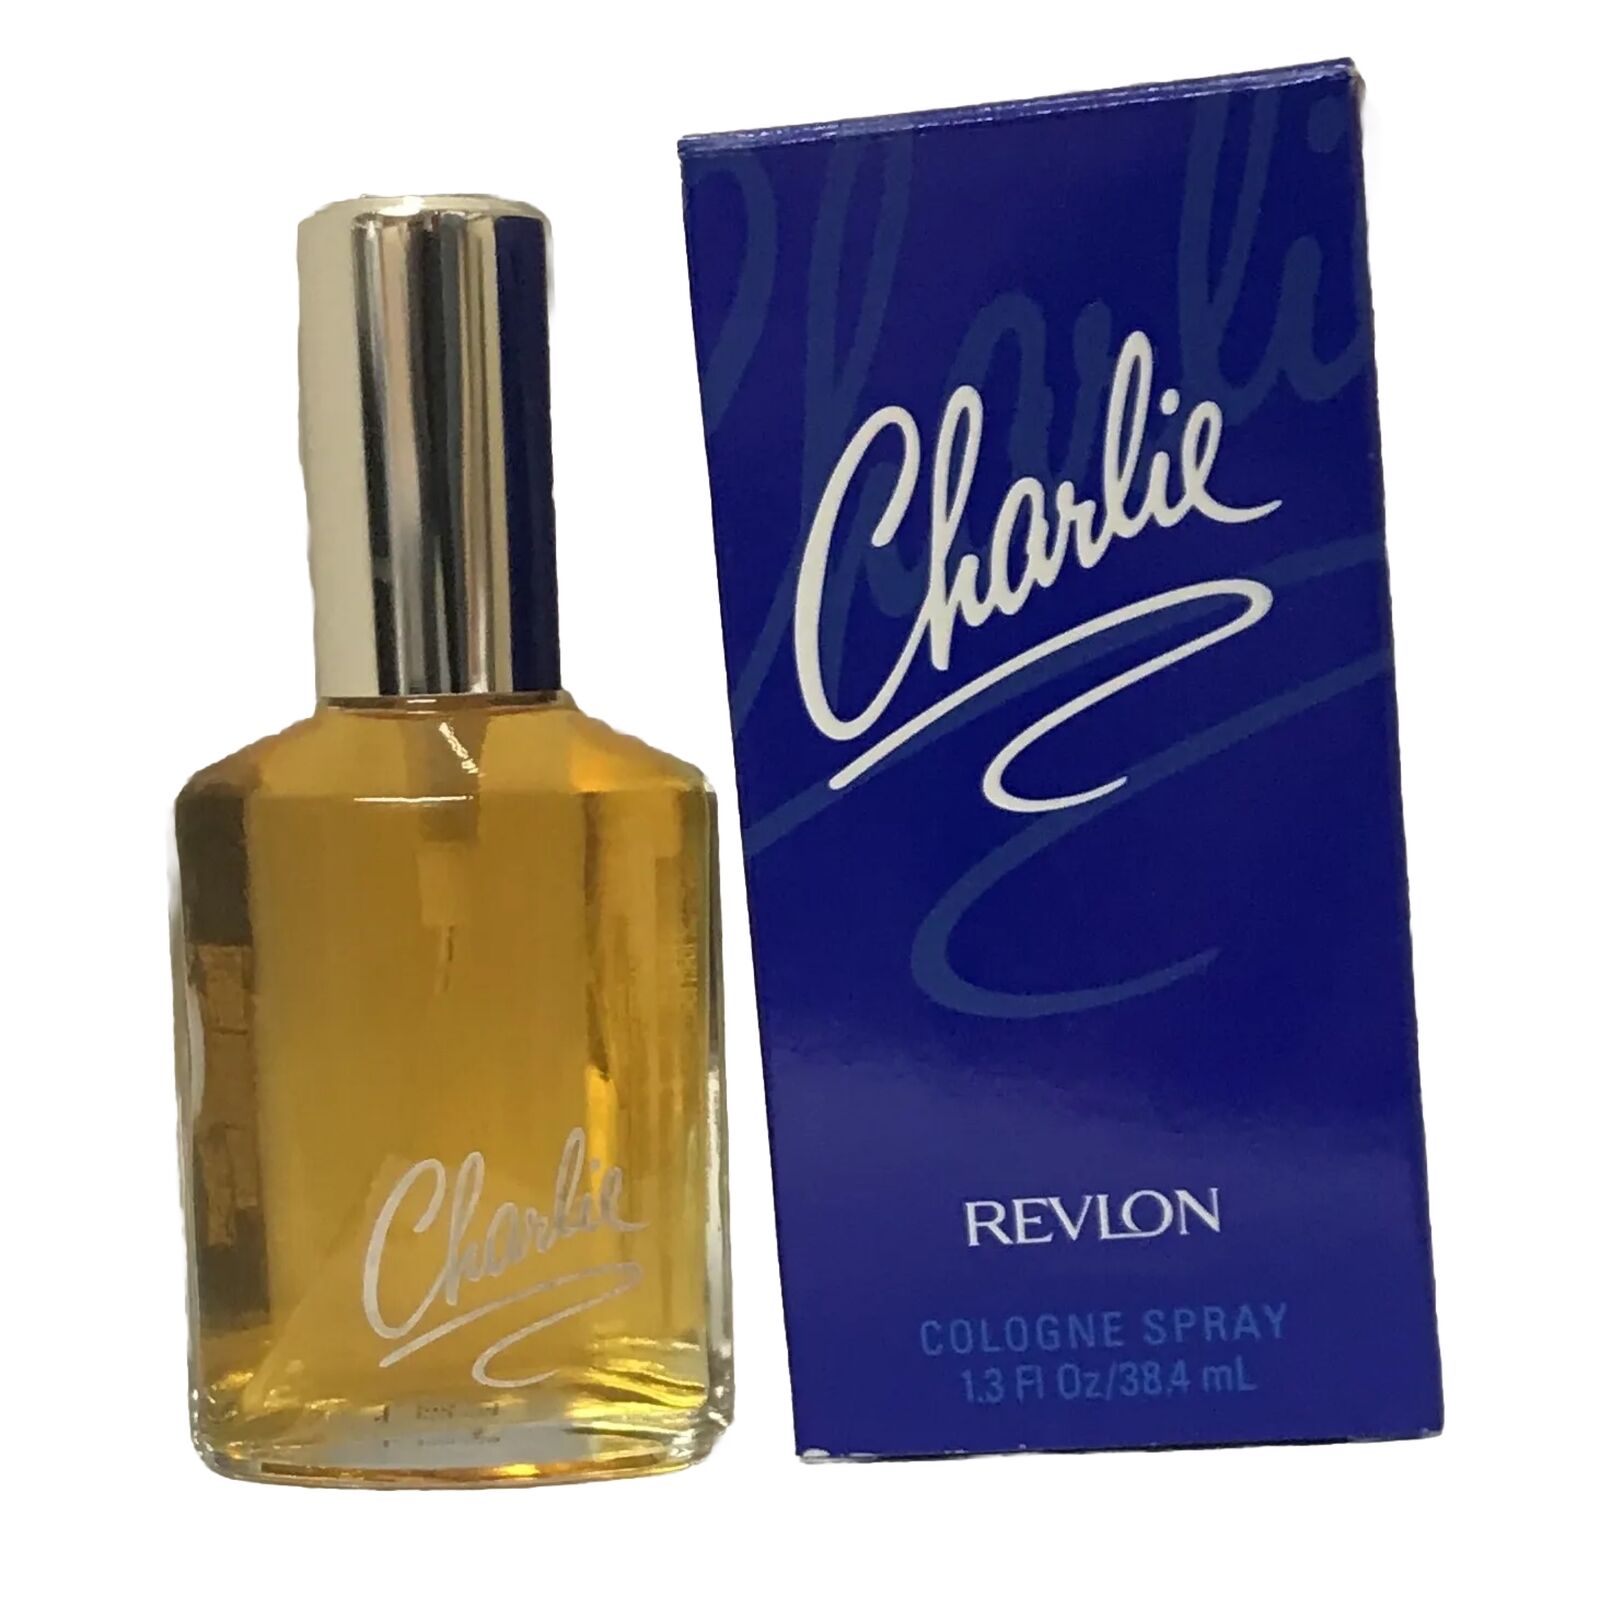 Charlie Revlon  Cologne Spray 1.3  fl oz Original 90s Box Might Say Concentrated